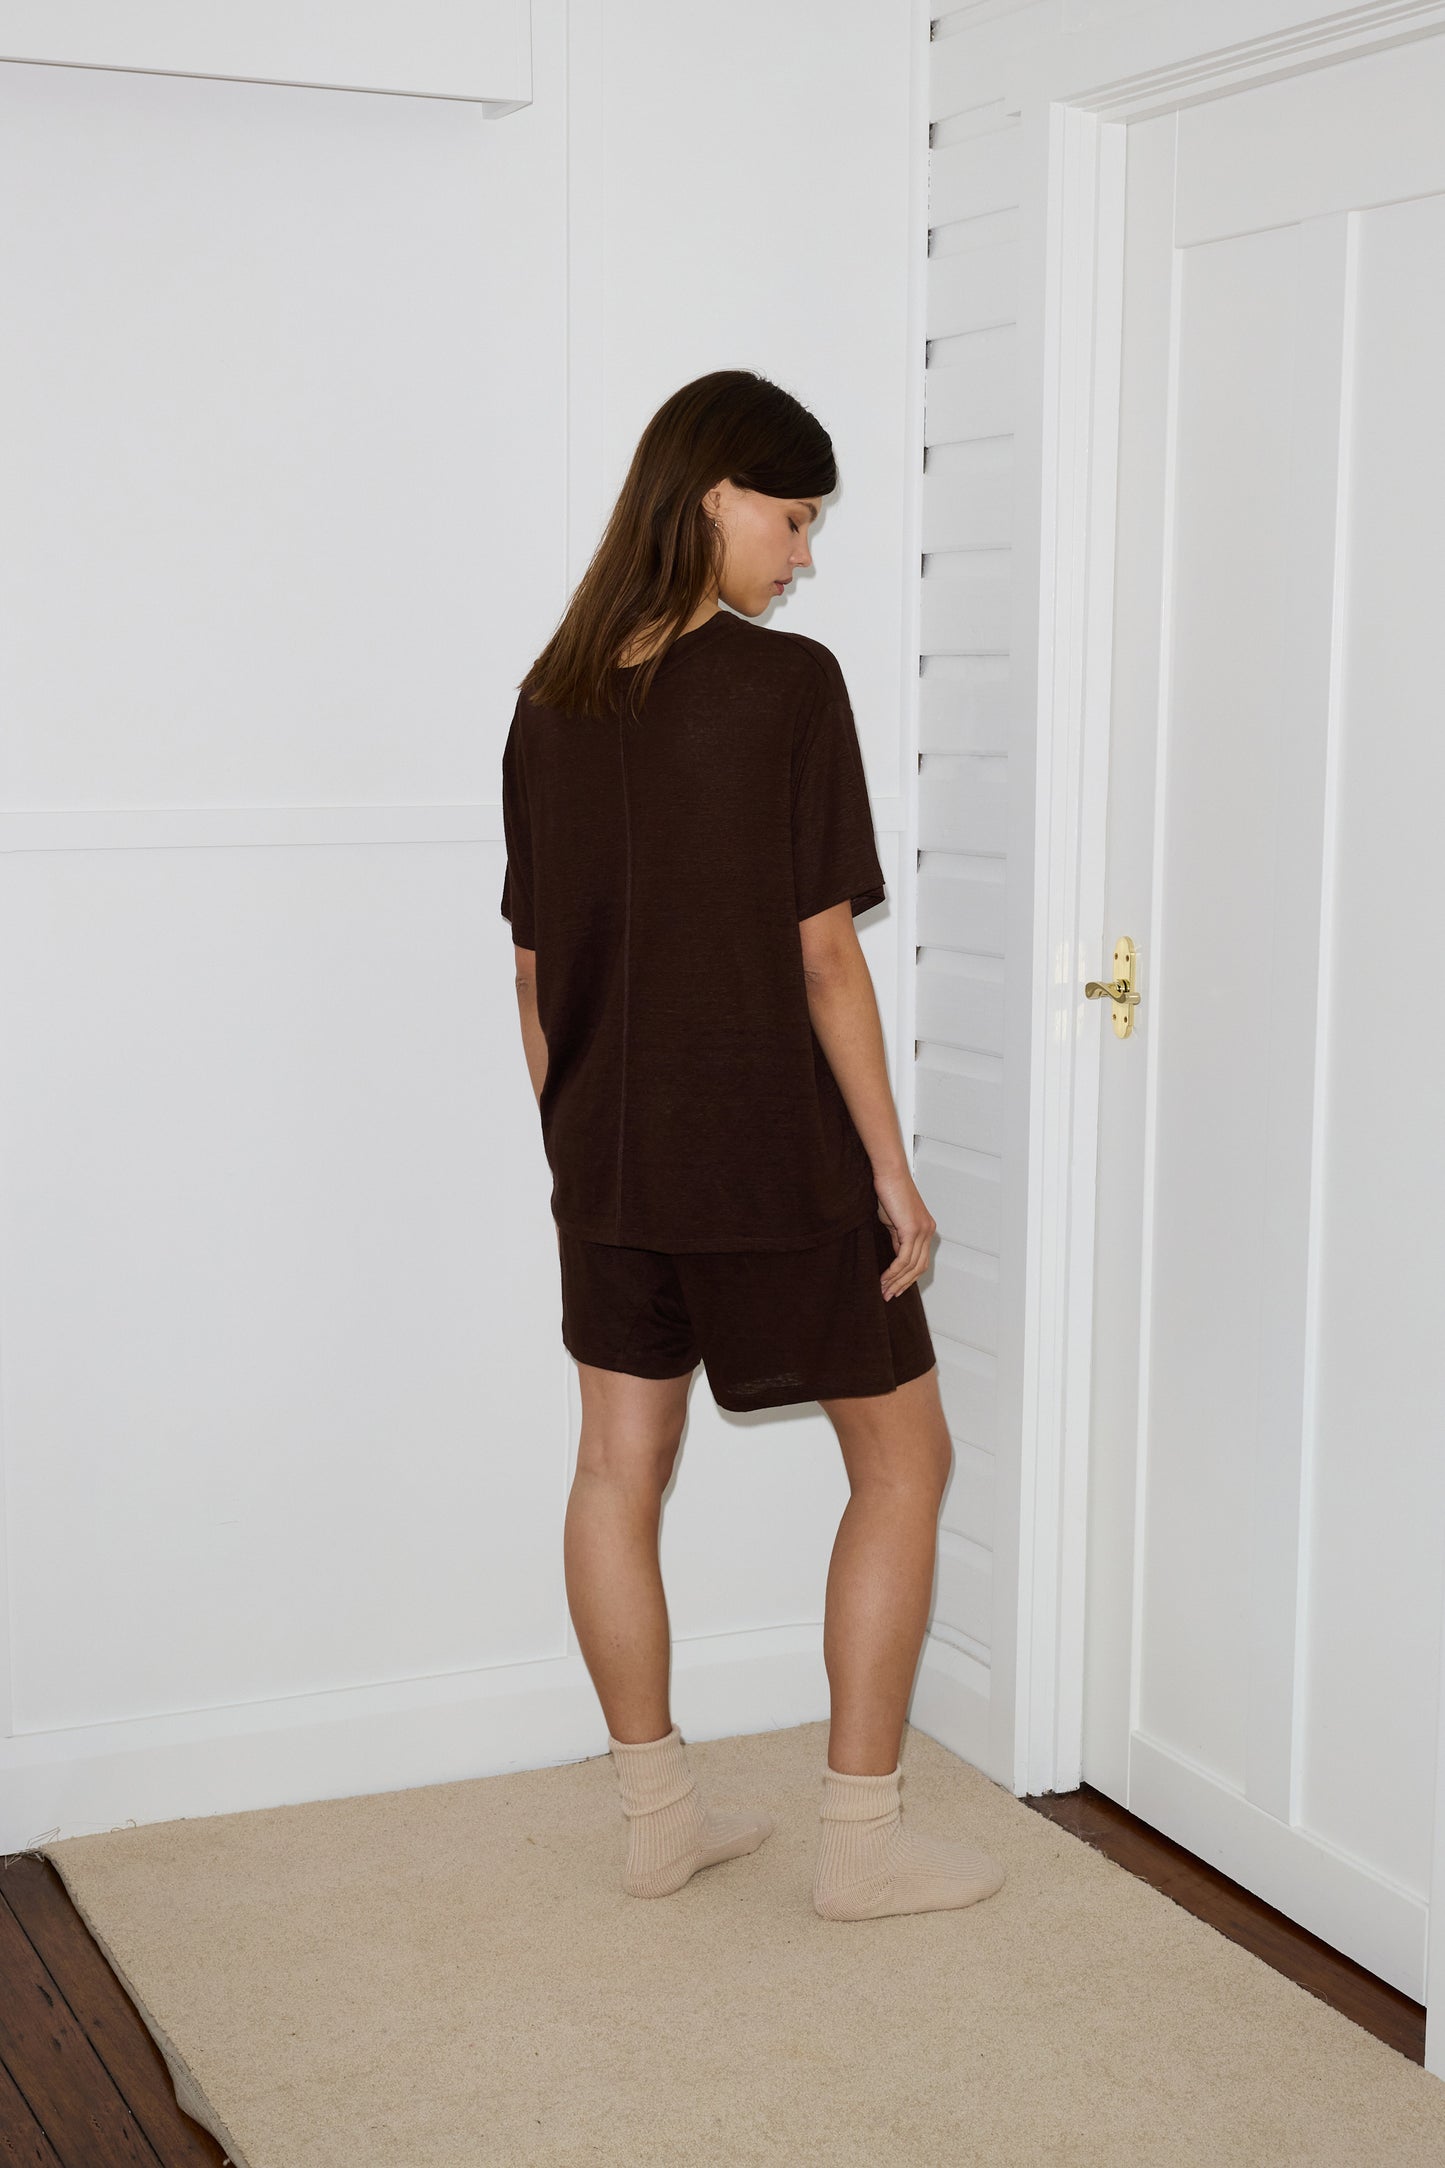 Female model wearing soft short - chocolate by Deiji Studios against plain background